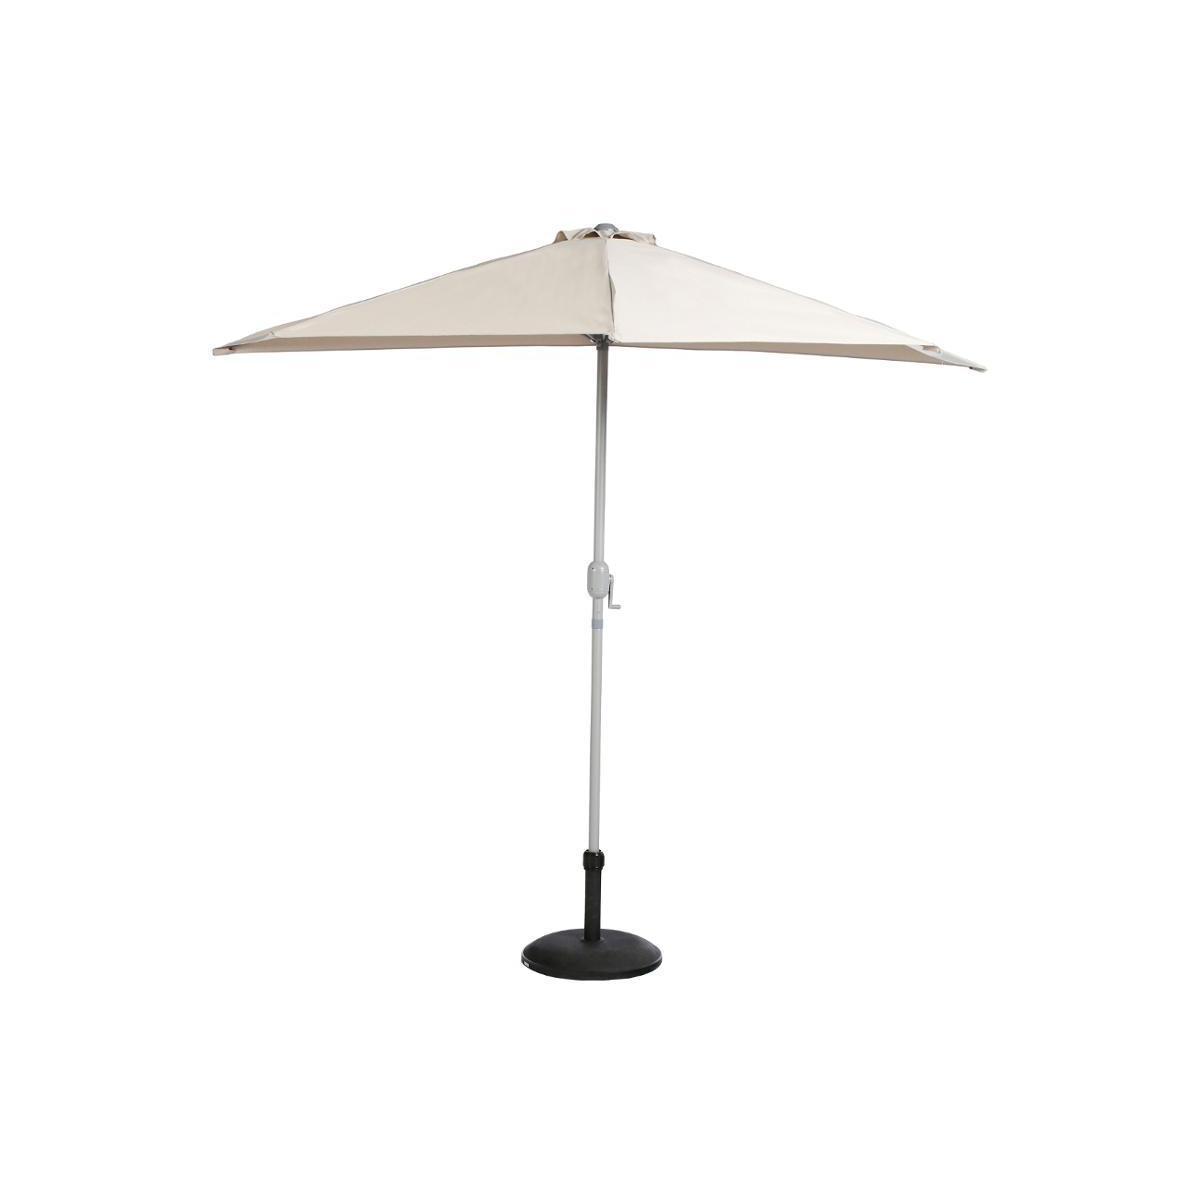 Demi-parasol Serena - ø 2.65 x H 2.35 cm - Beige sable - HESPERIDE